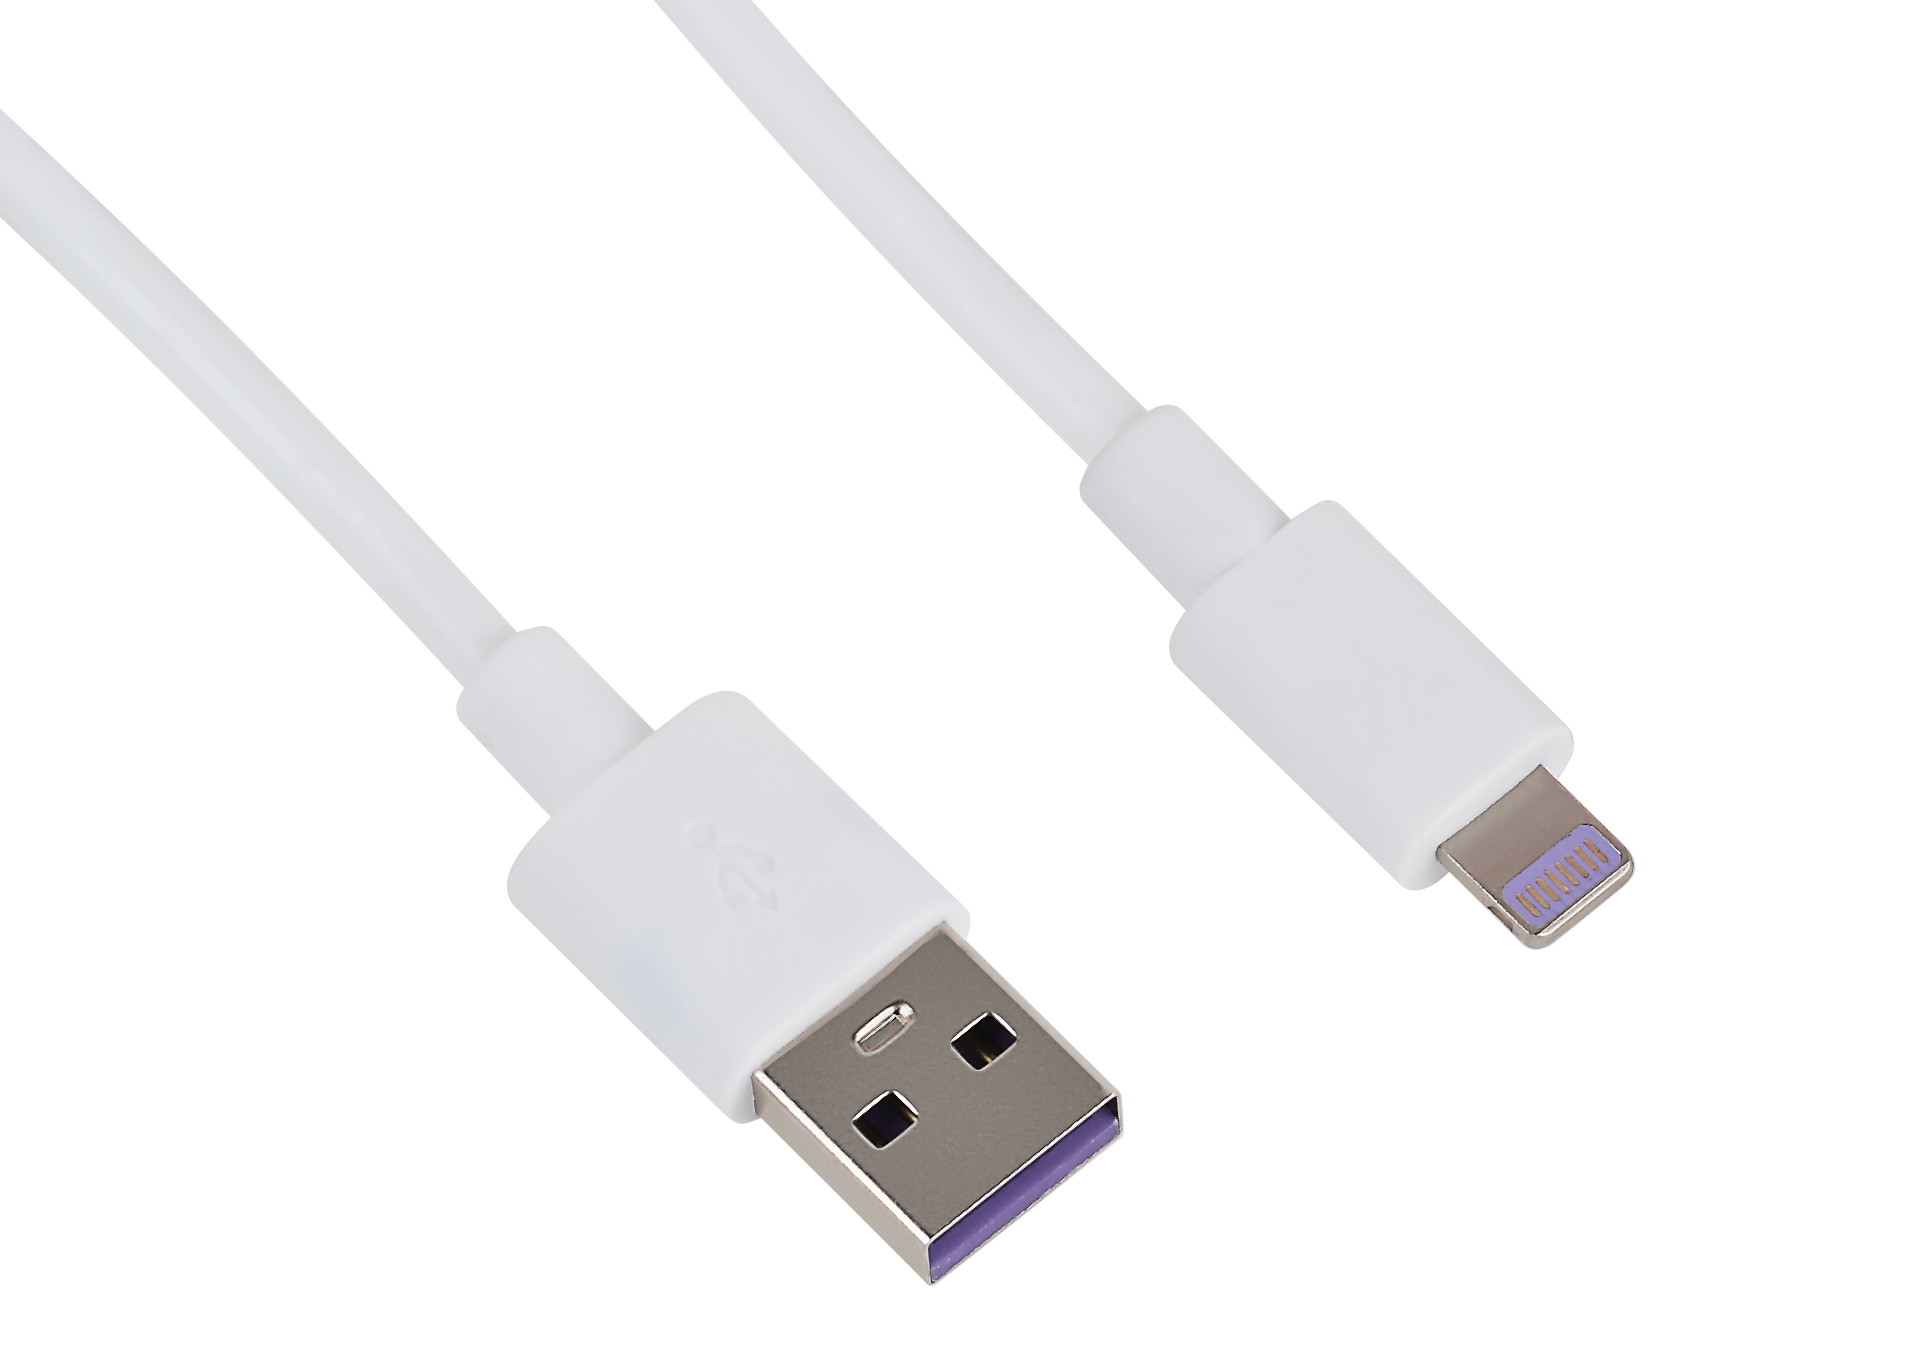 USB кабель Intro CI450 lightning белый 1м